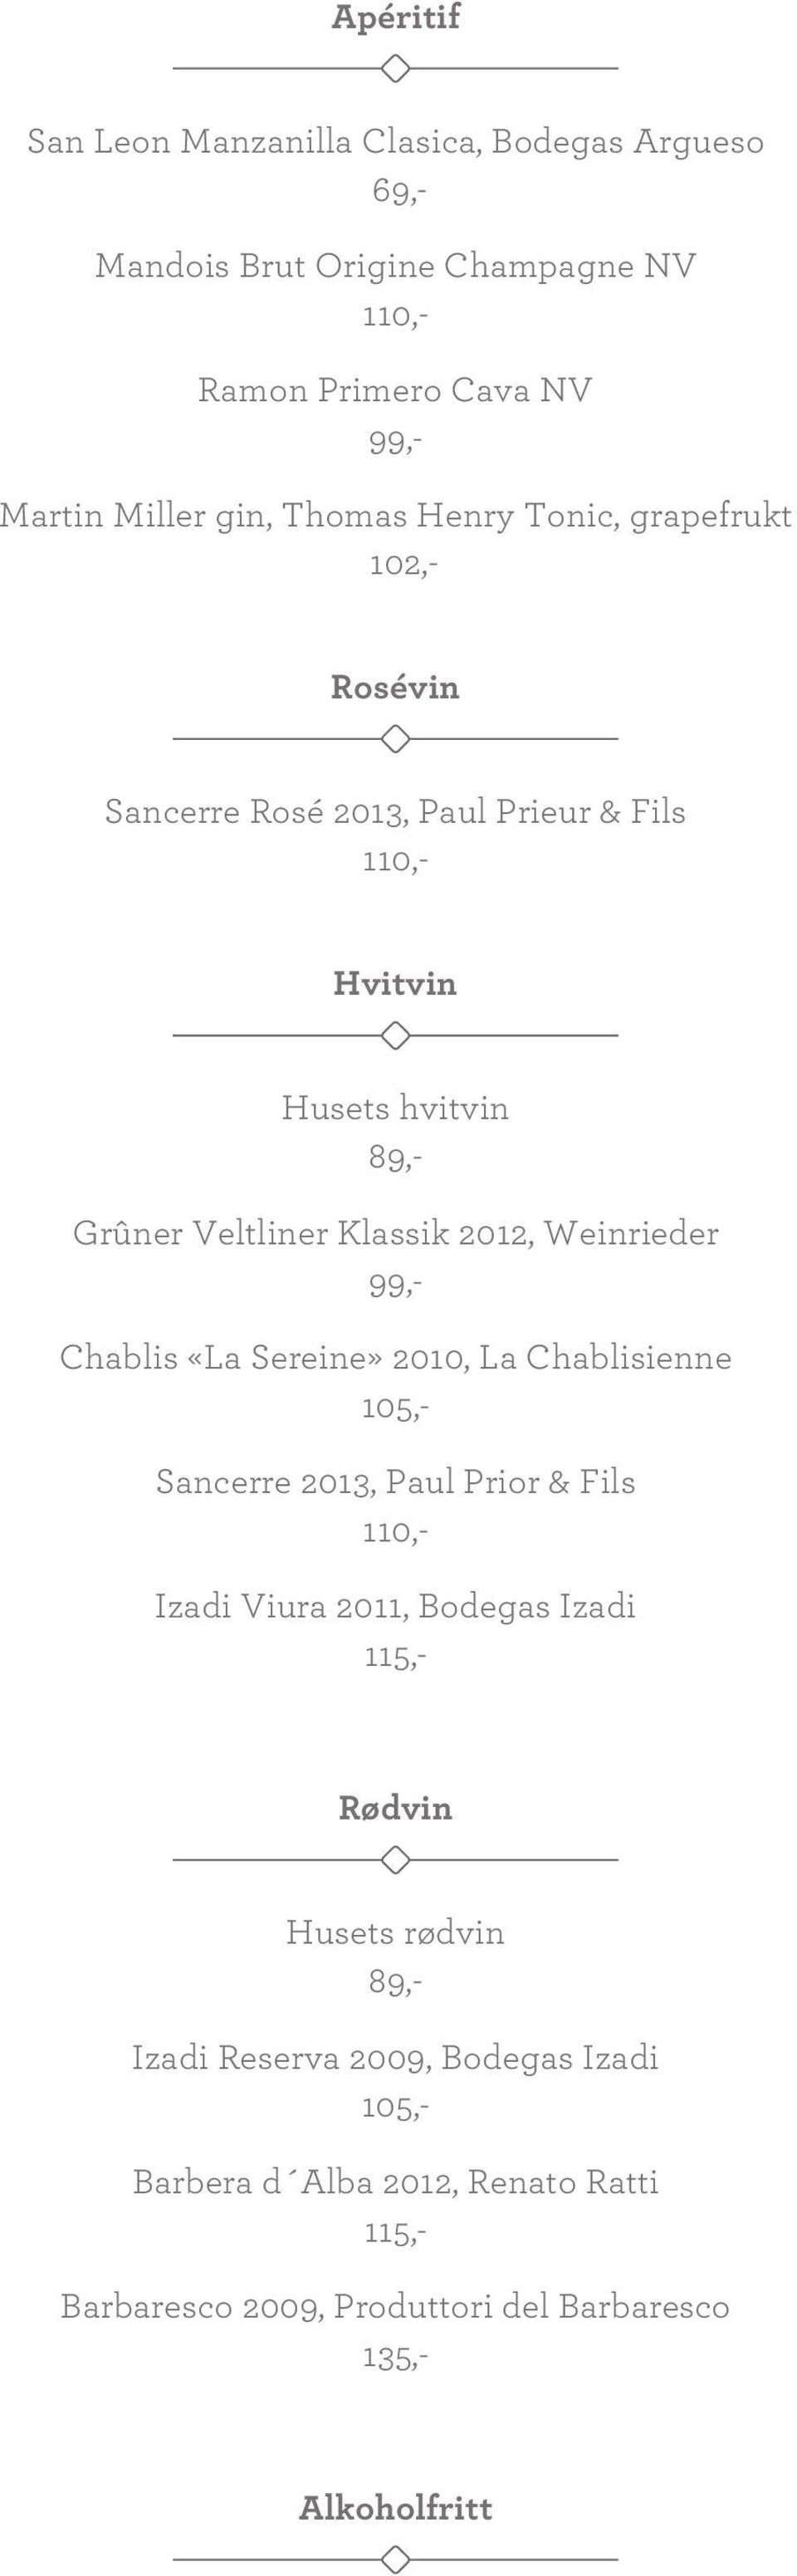 Weinrieder 99,- Chablis «La Sereine» 2010, La Chablisienne 105,- Sancerre 2013, Paul Prior & Fils 110,- Izadi Viura 2011, Bodegas Izadi 115,- Rødvin